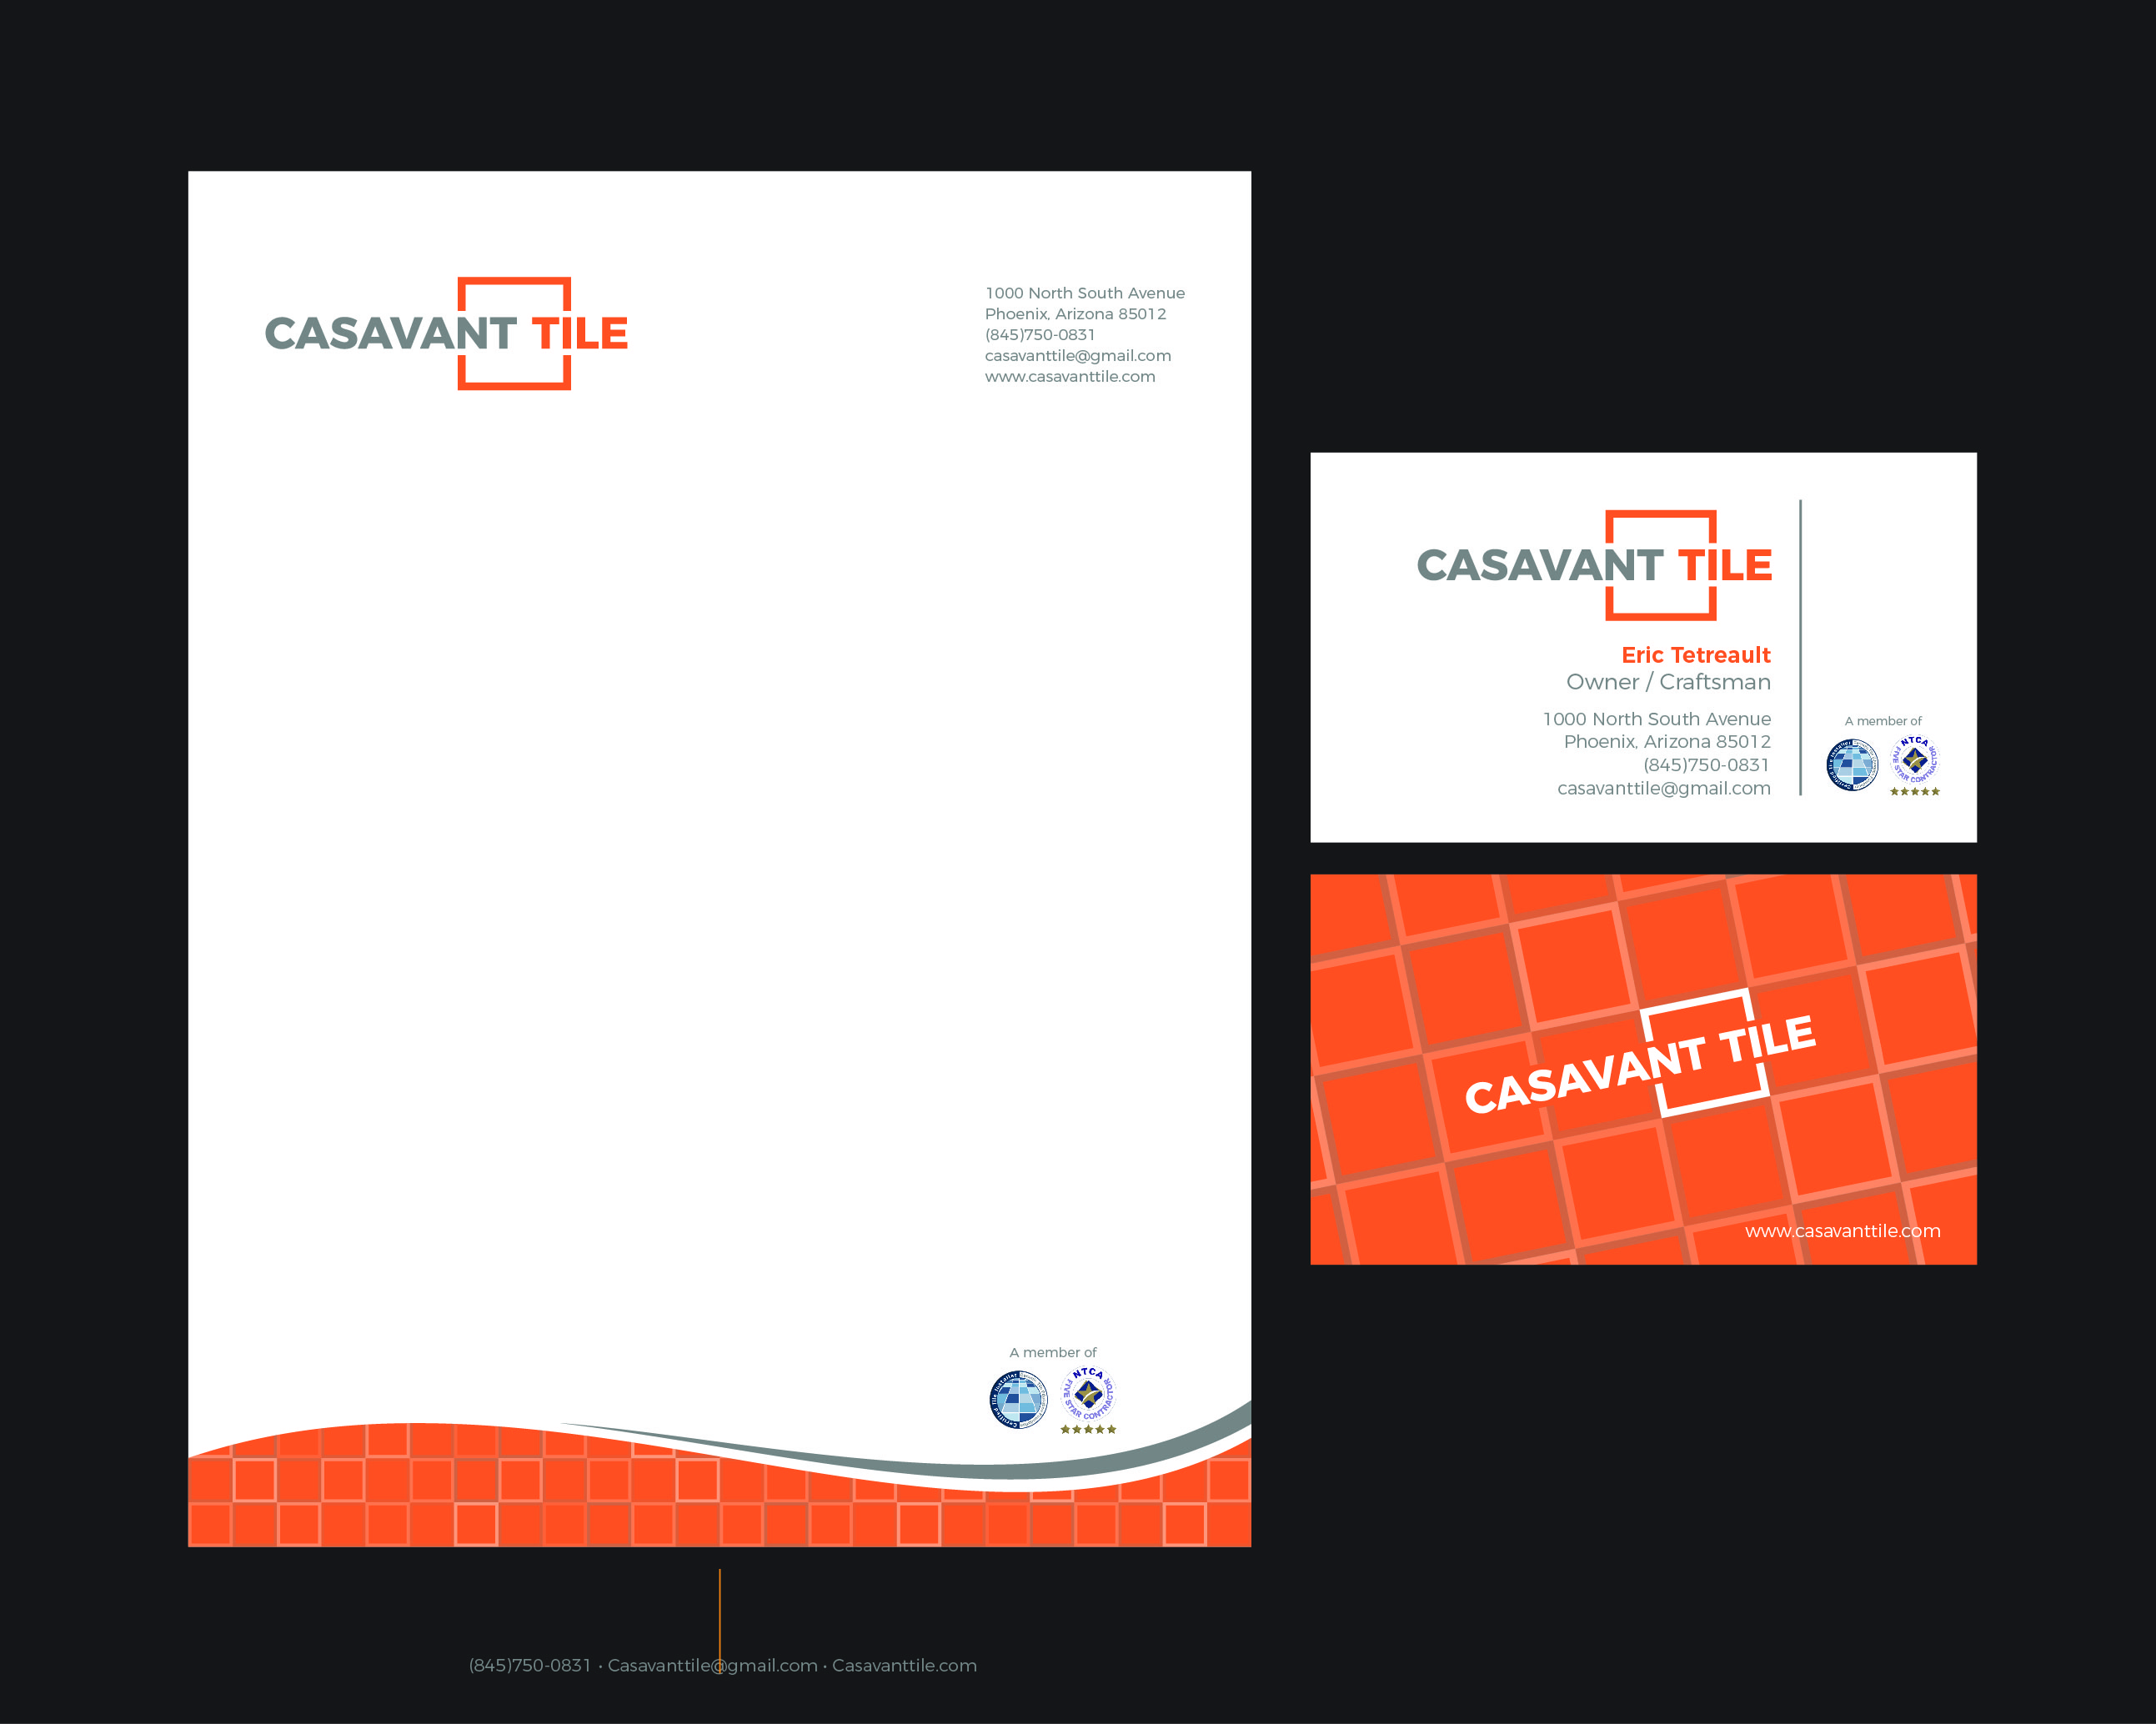 Business Card & Stationery Design entry 1776348 submitted by Efzone2005 to the Business Card & Stationery Design for Casavant Tile run by CasavantTile